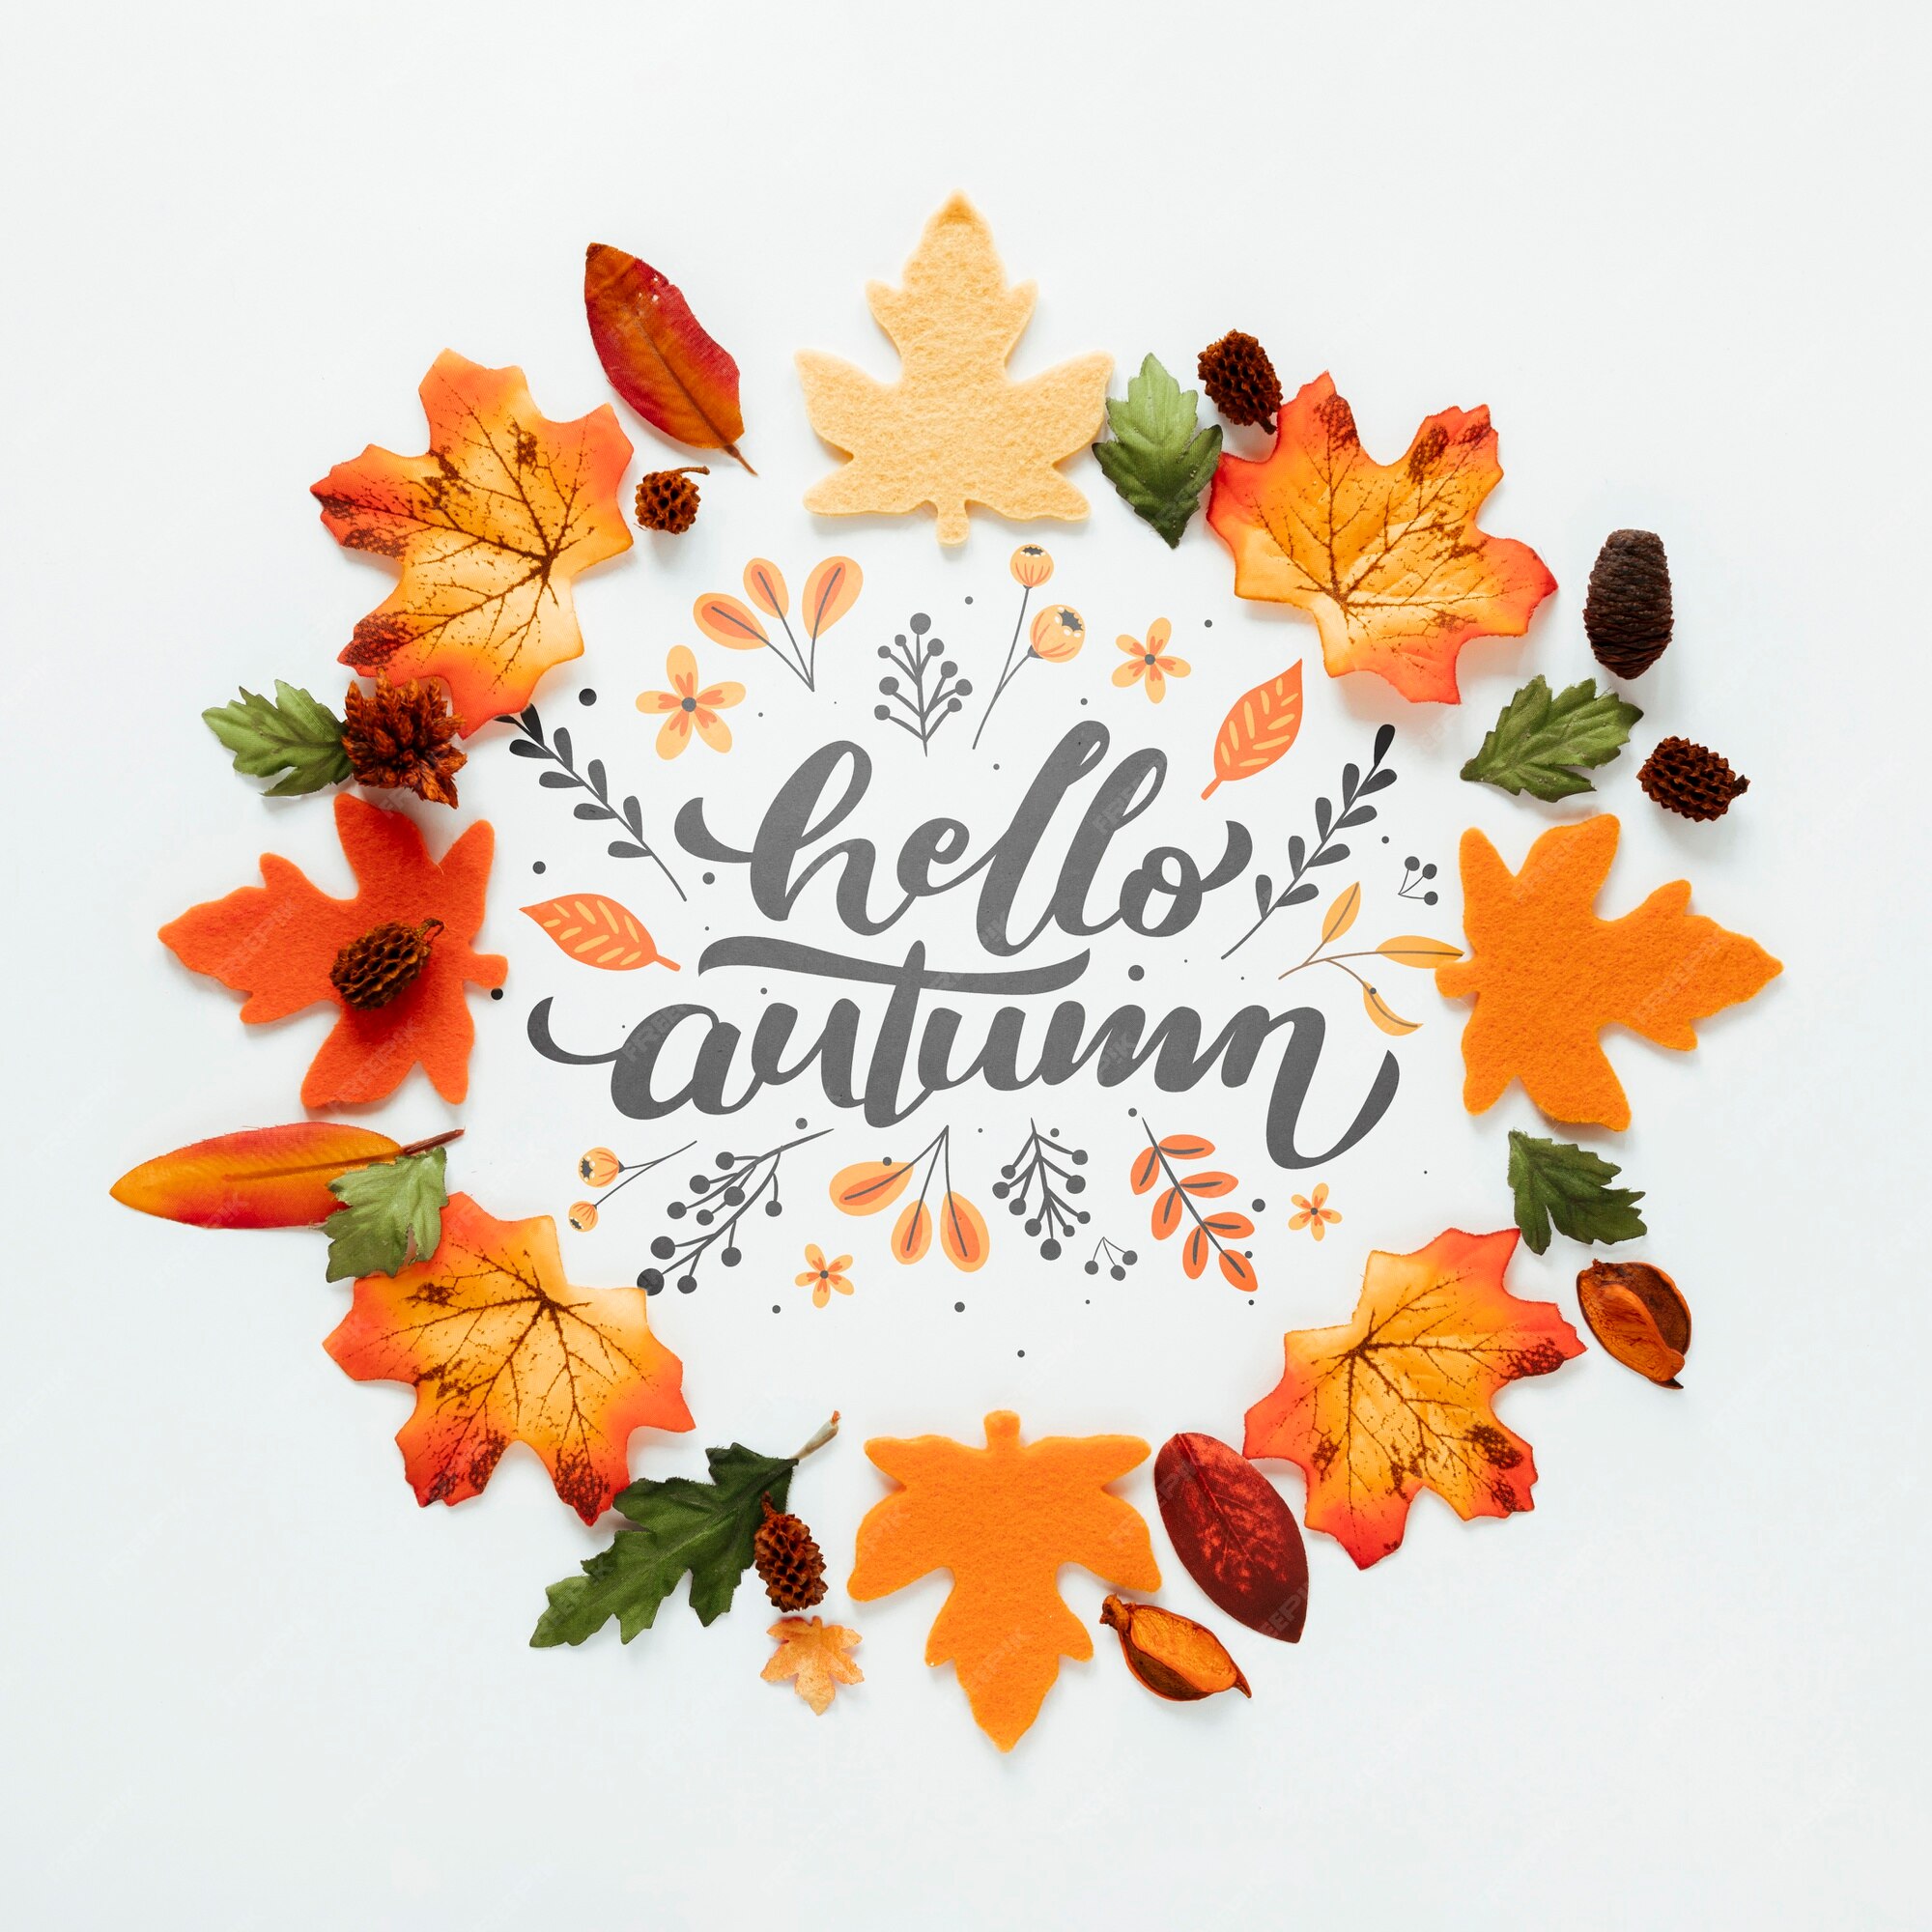 Hello autumn Images | Free Vectors, Stock Photos & PSD